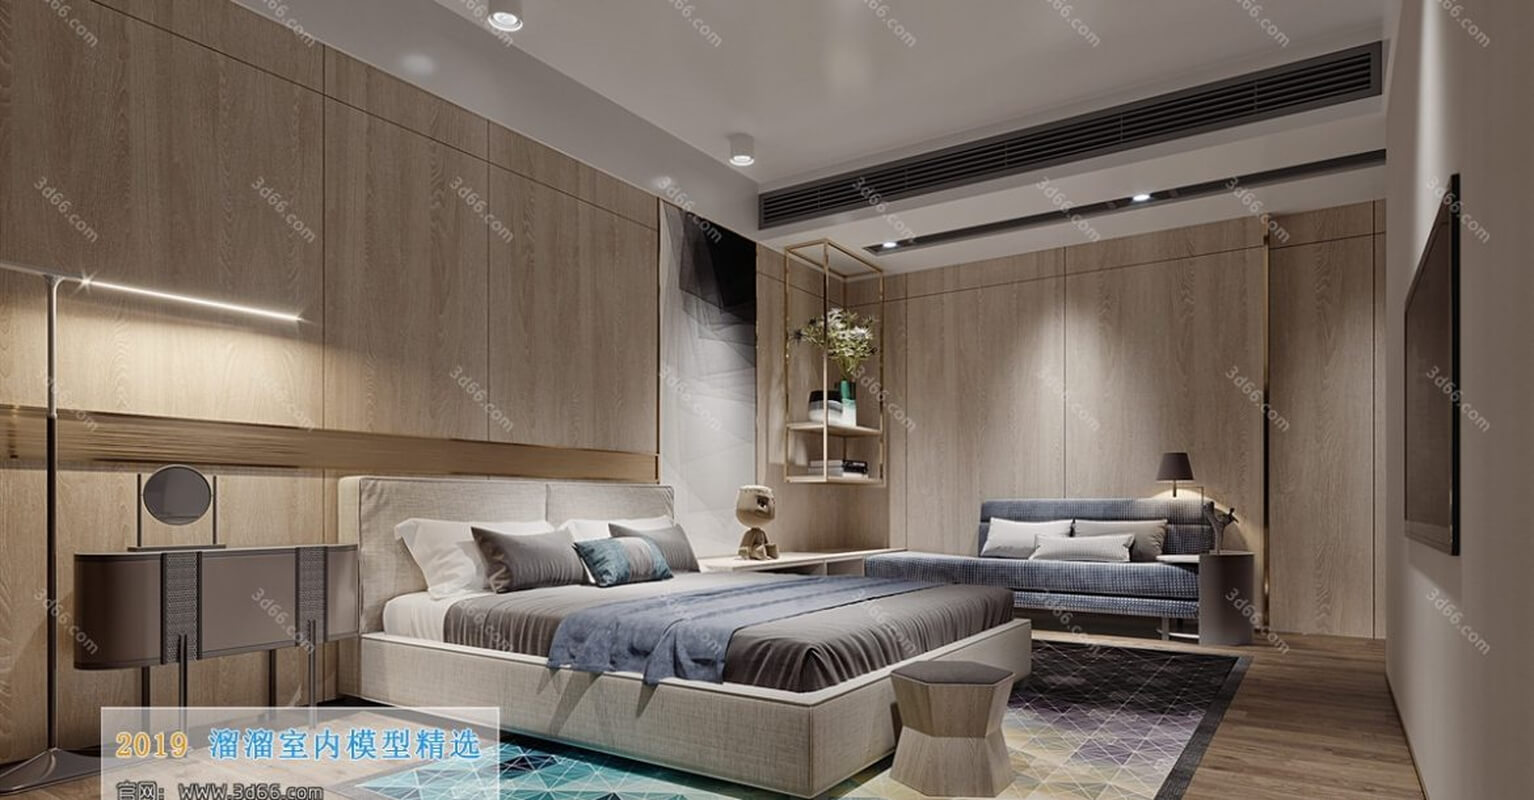 3D66 Hotel Suite Interior 2019 Style (05)